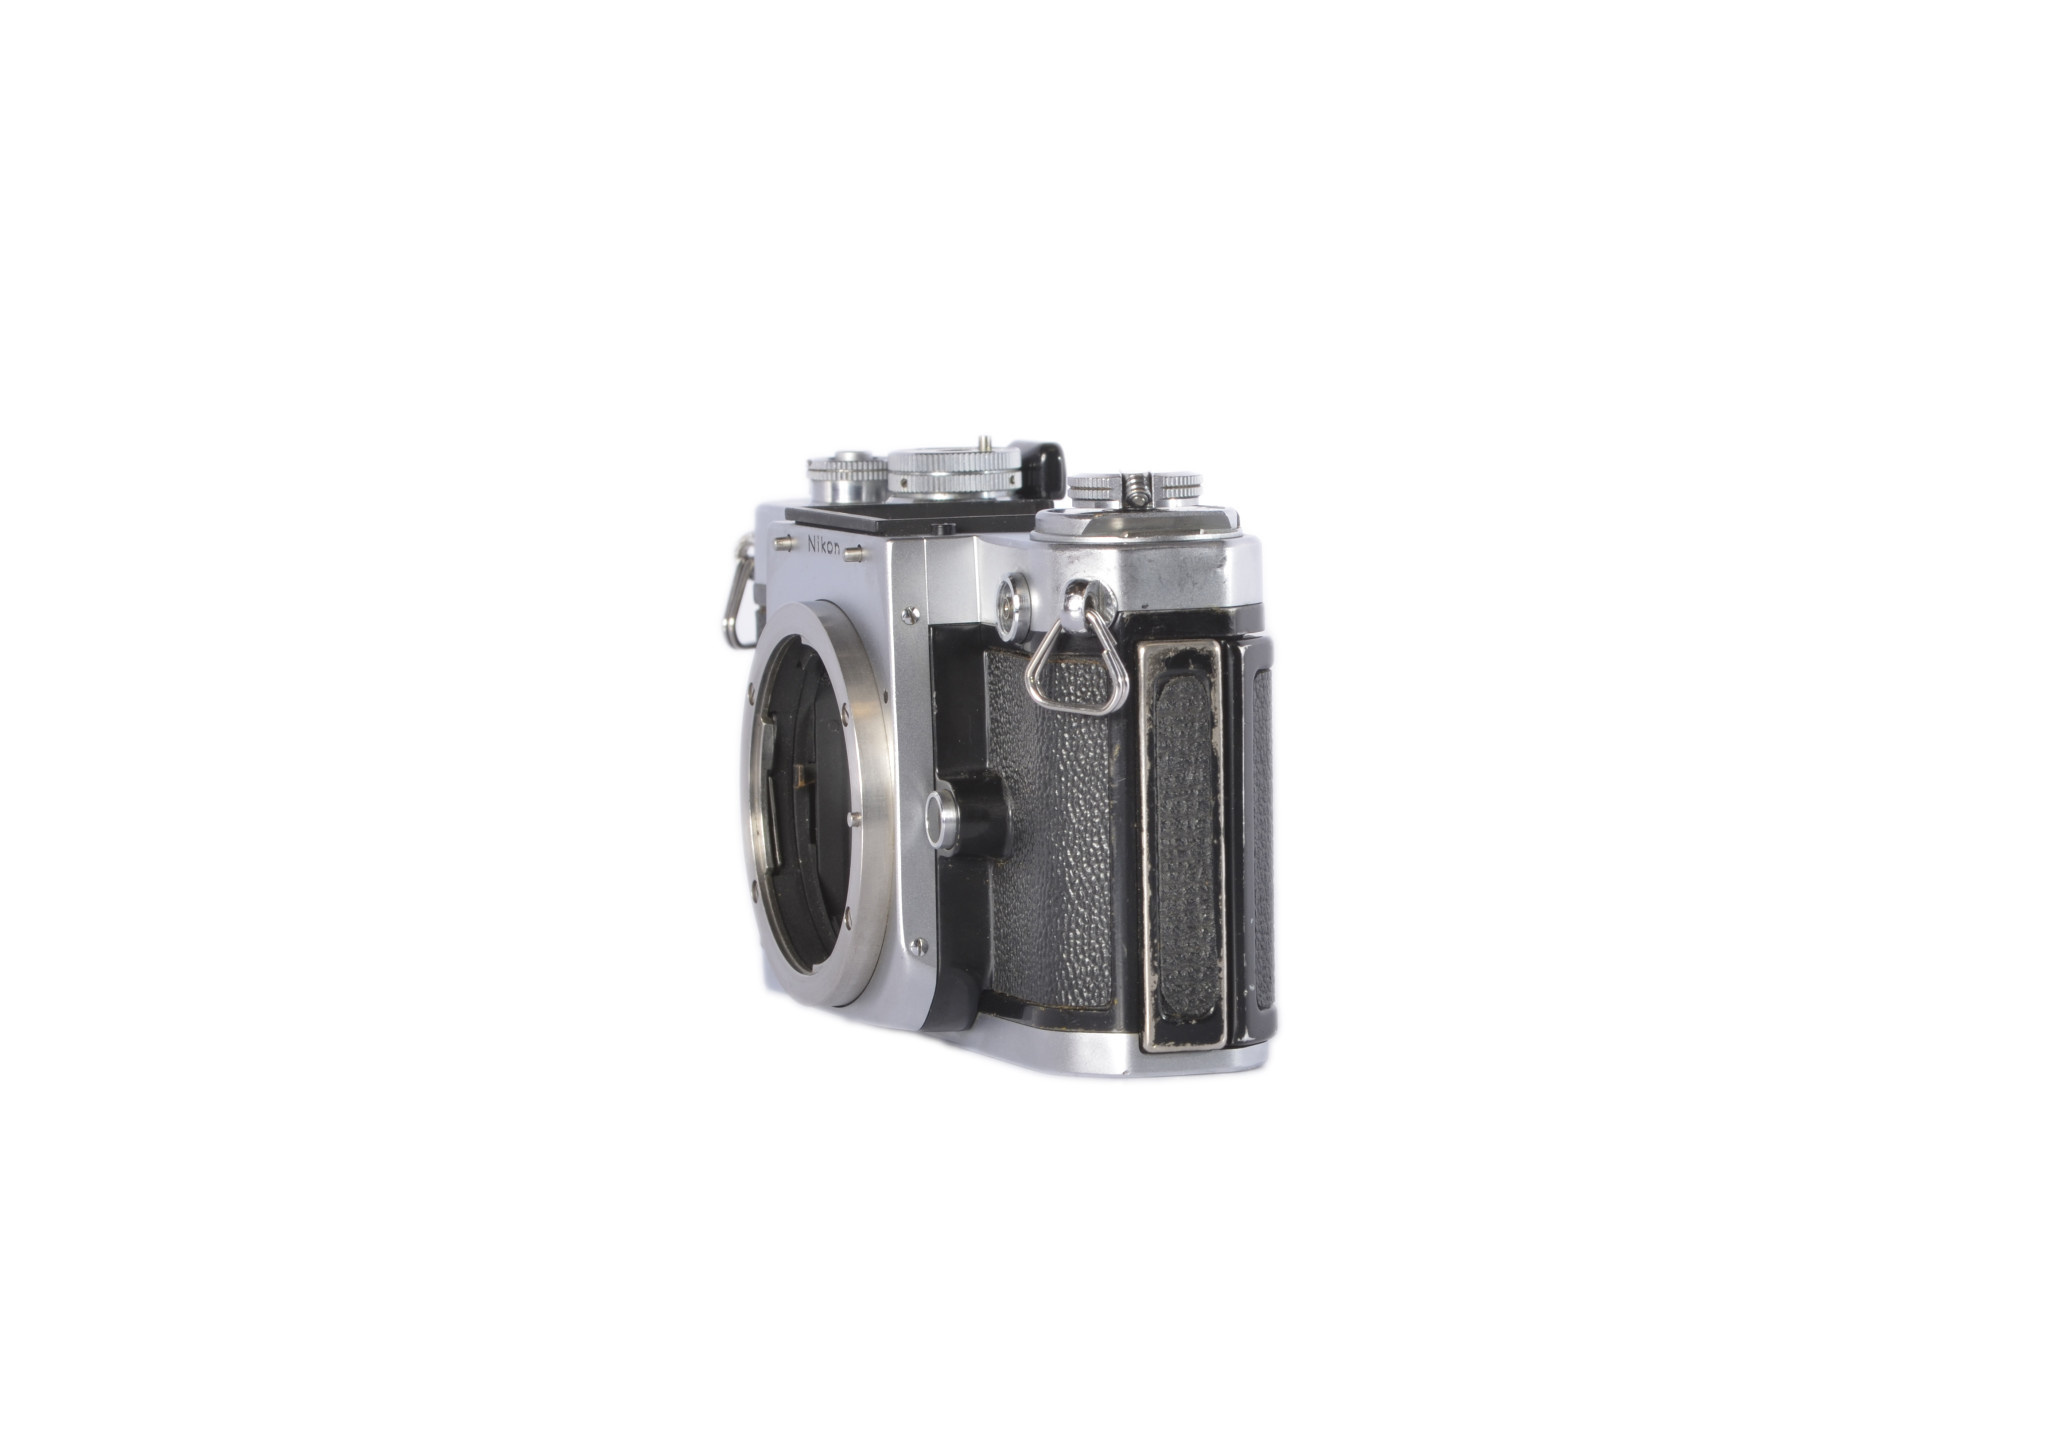 Nikon F2 Chrome Film Camera (Body Only) LeZot Camera Sales and Camera  Repair Camera Buyers Digital Printing